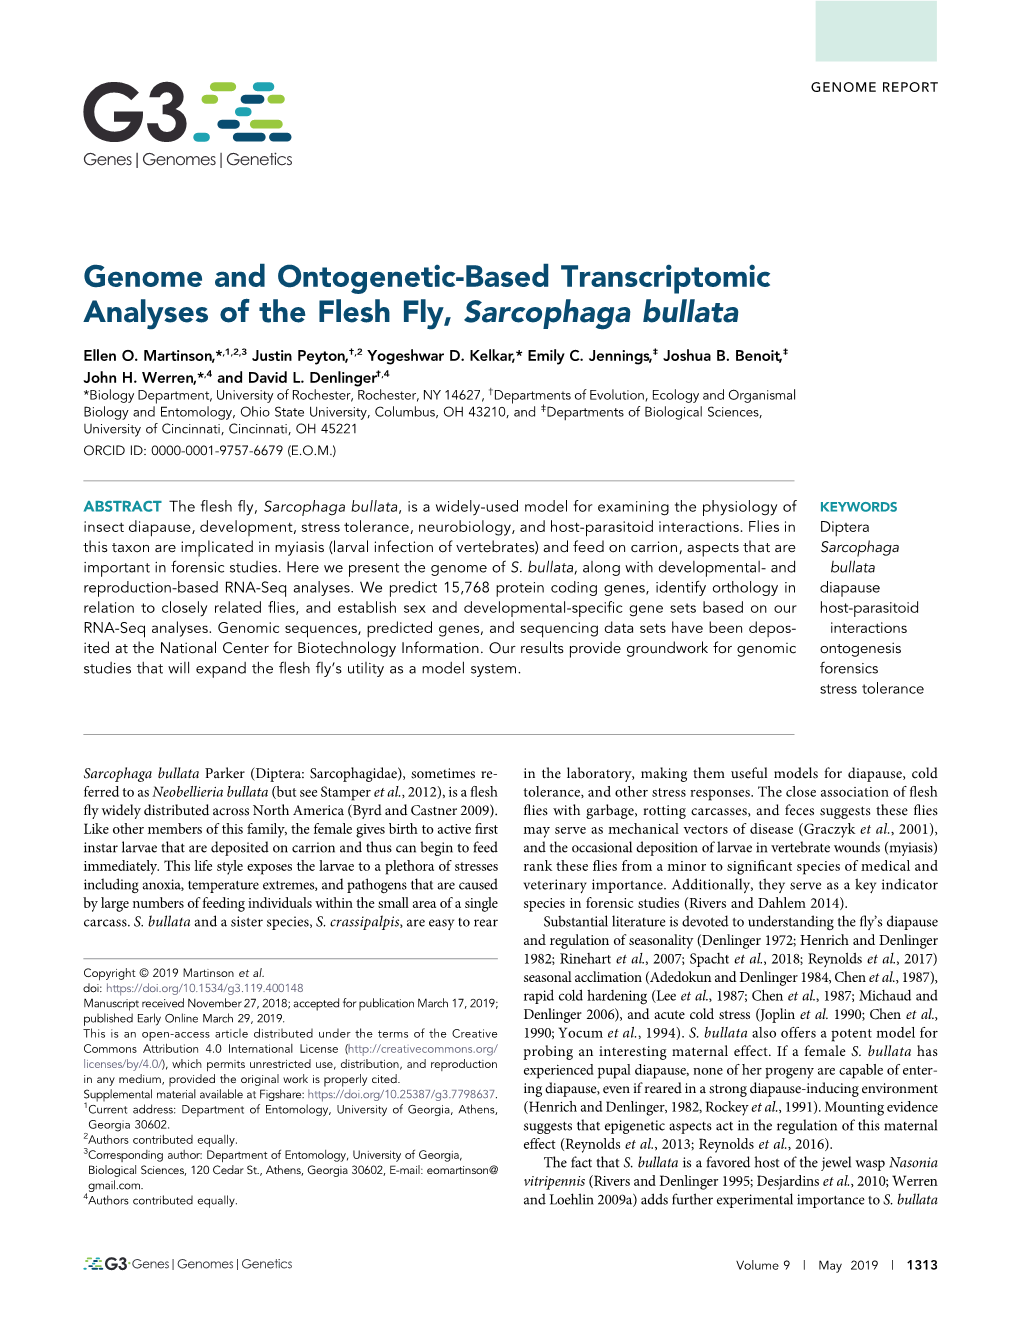 Genome and Ontogenetic-Based Transcriptomic Analyses of the Flesh Fly, Sarcophaga Bullata